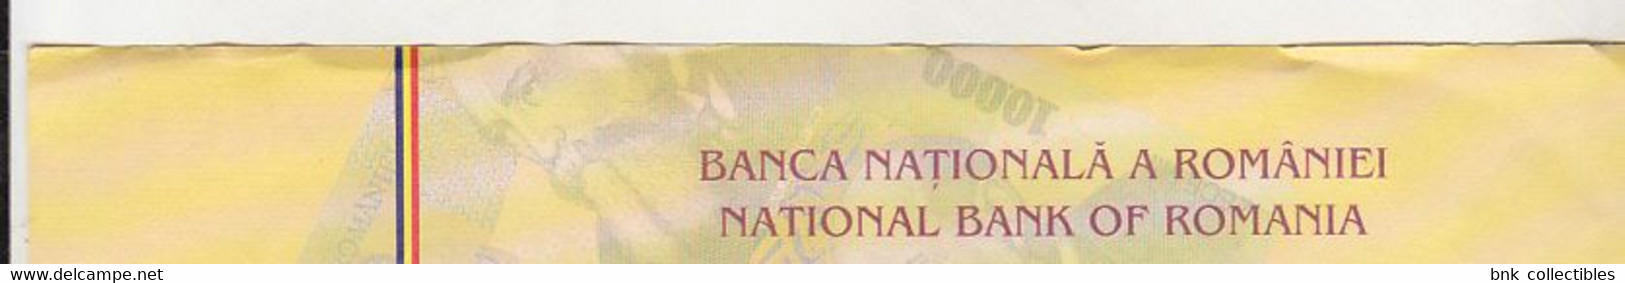 Romania 10000 lei 2000 (2001) uncut sheet of 4 banknotes, certificate of autenticity , Isarescu signature